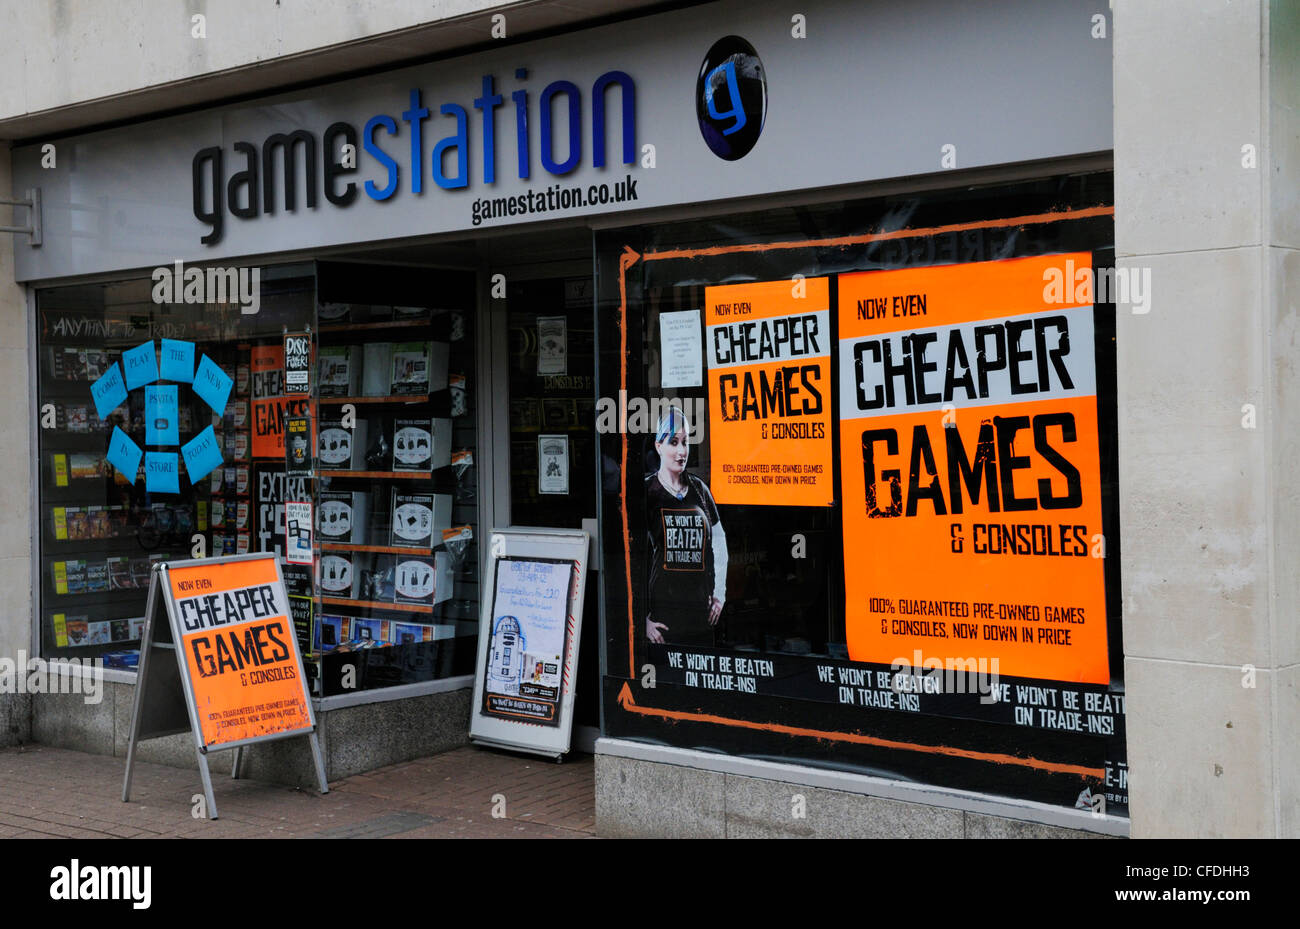 Gamestation Computer Gaming Shop, Cambridge, England, UK Stock Photo